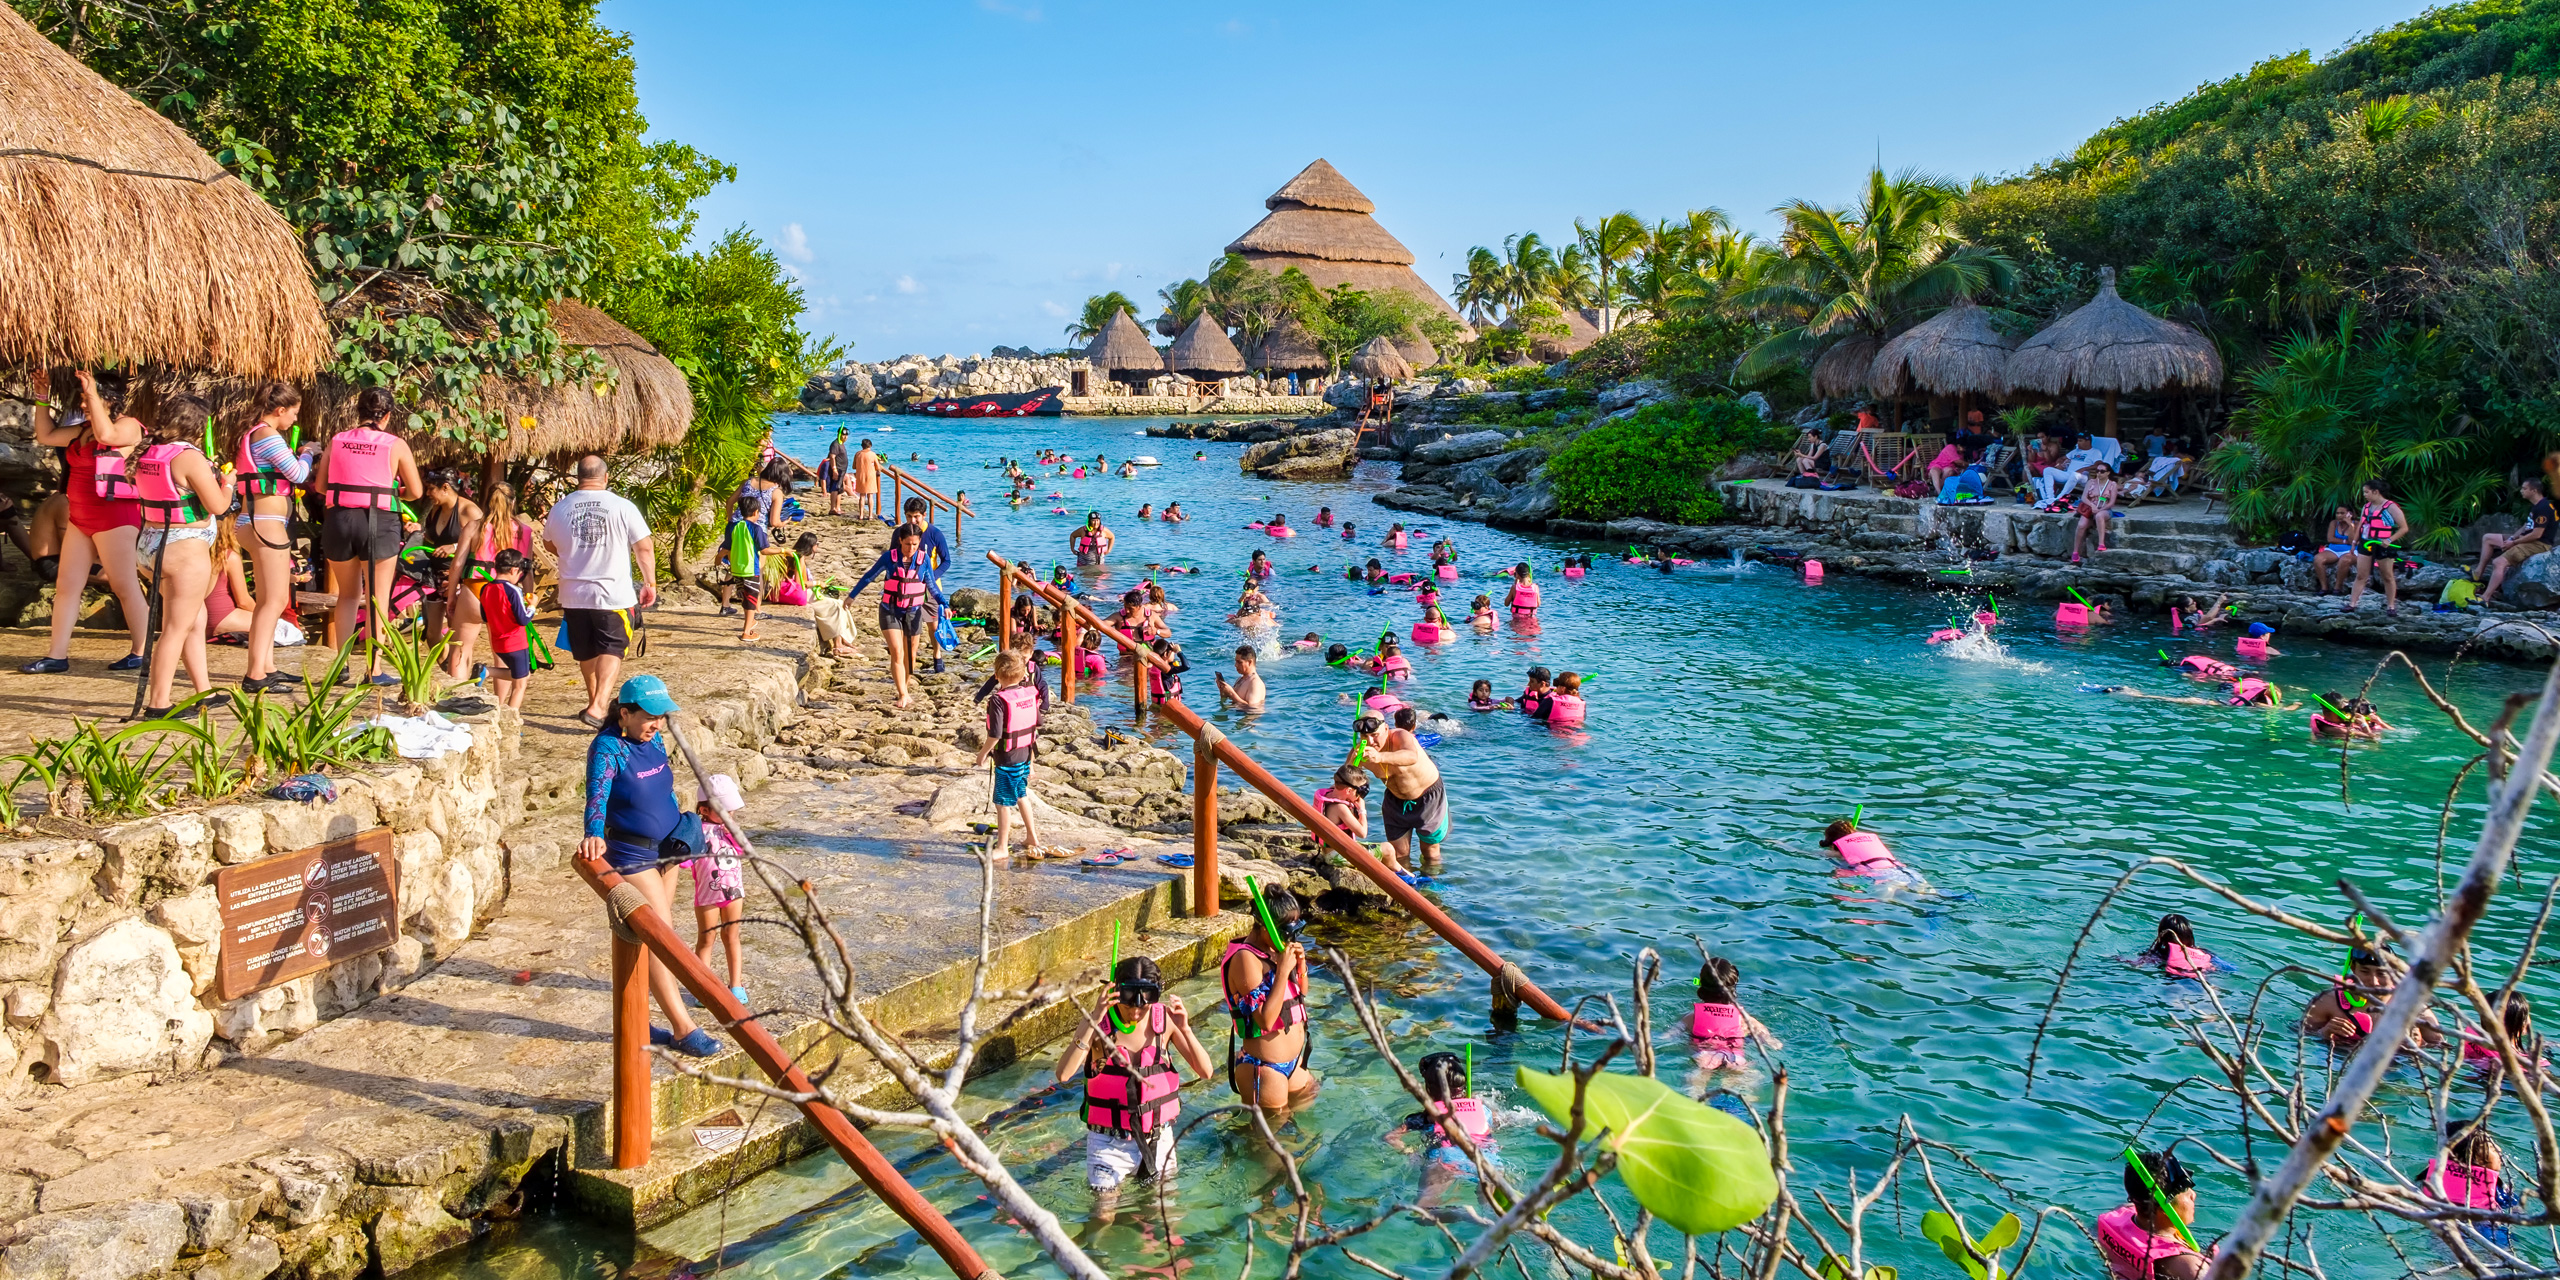 Snorkeling at XCaret park on the Mayan Riviera; Courtesy Kamira/Shutterstock